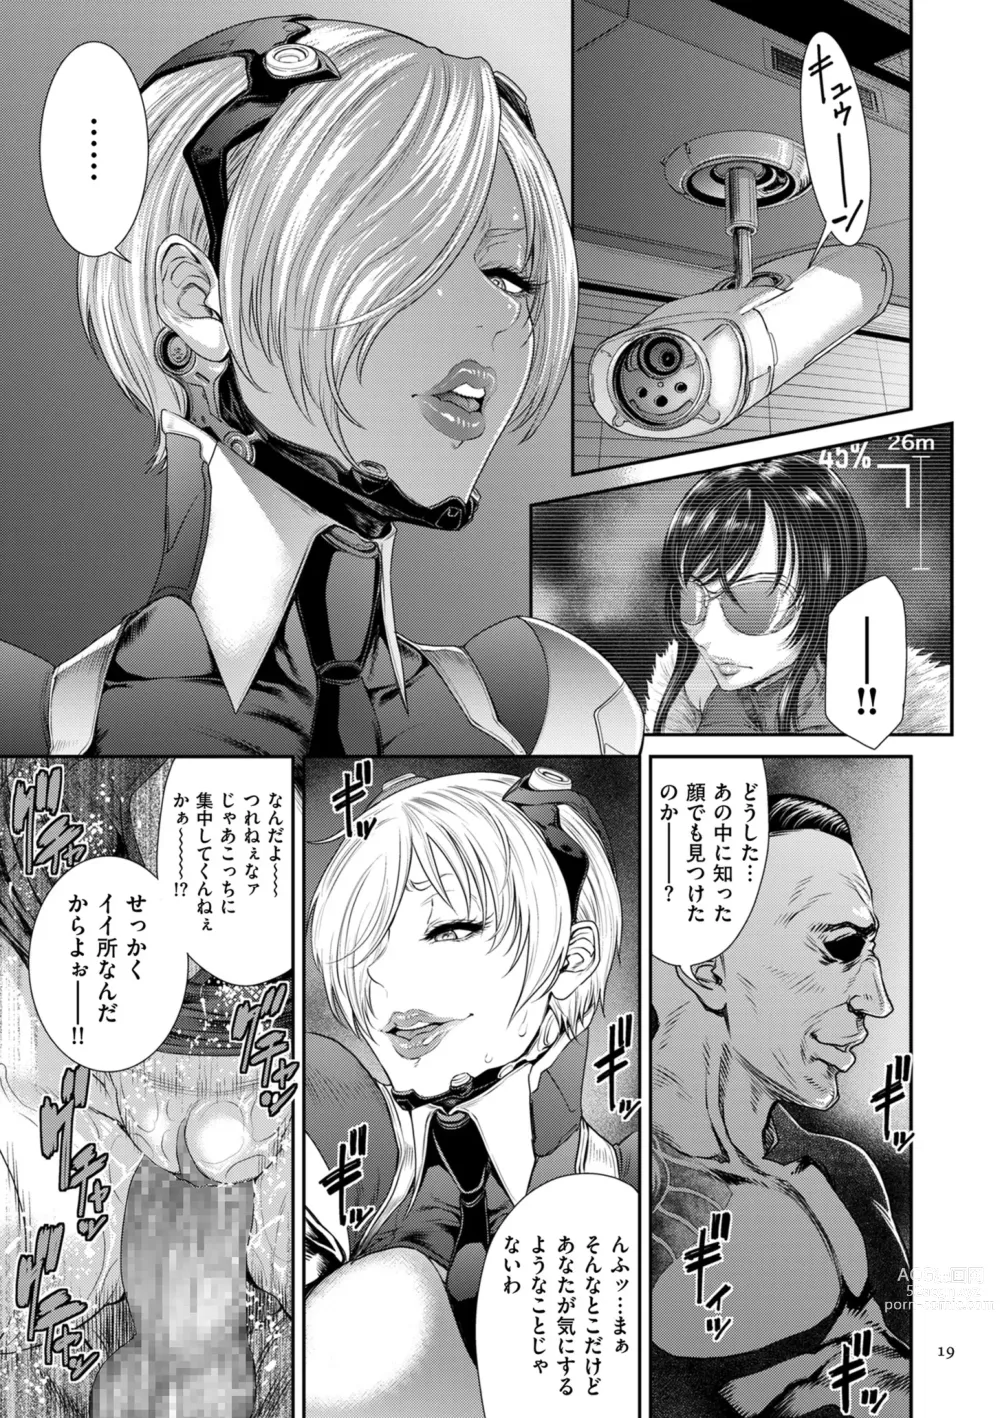 Page 19 of manga P. S. C. Sennyuu sousa-kan Reiko